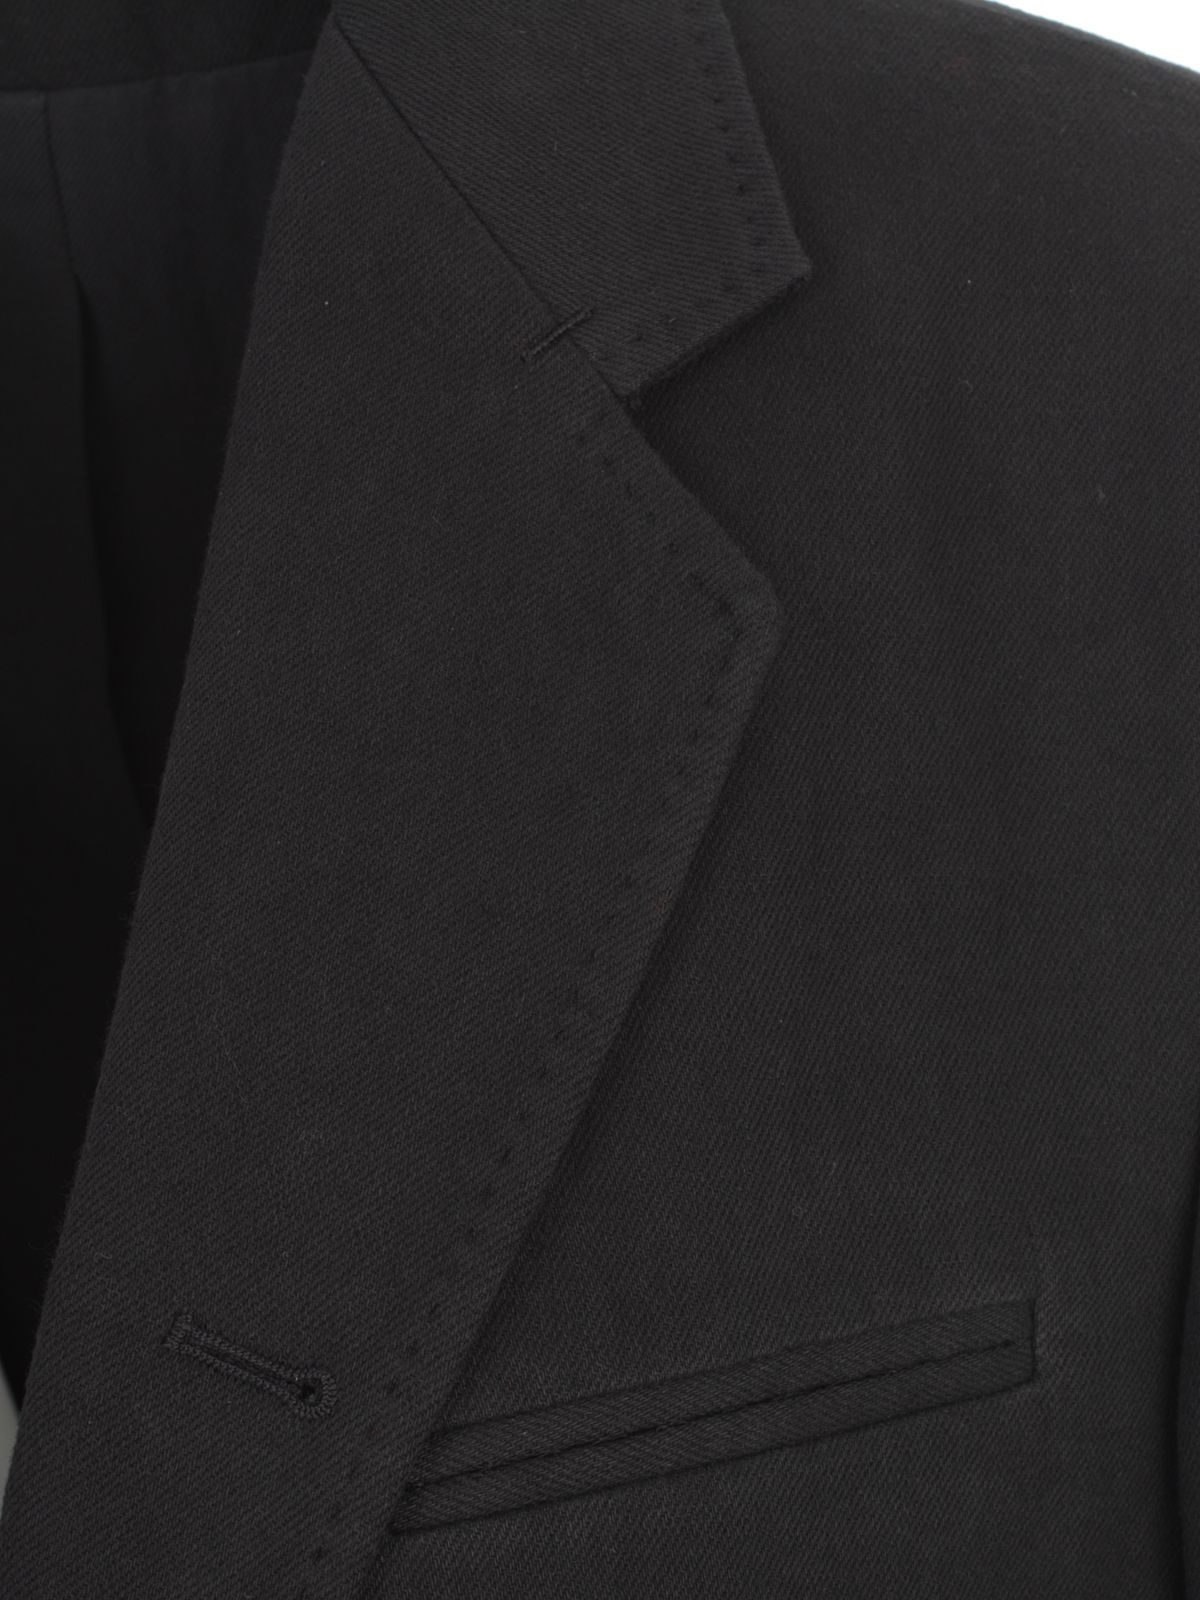 Palomar Ann Demeulemeester Man`s black cotton jacket - 3